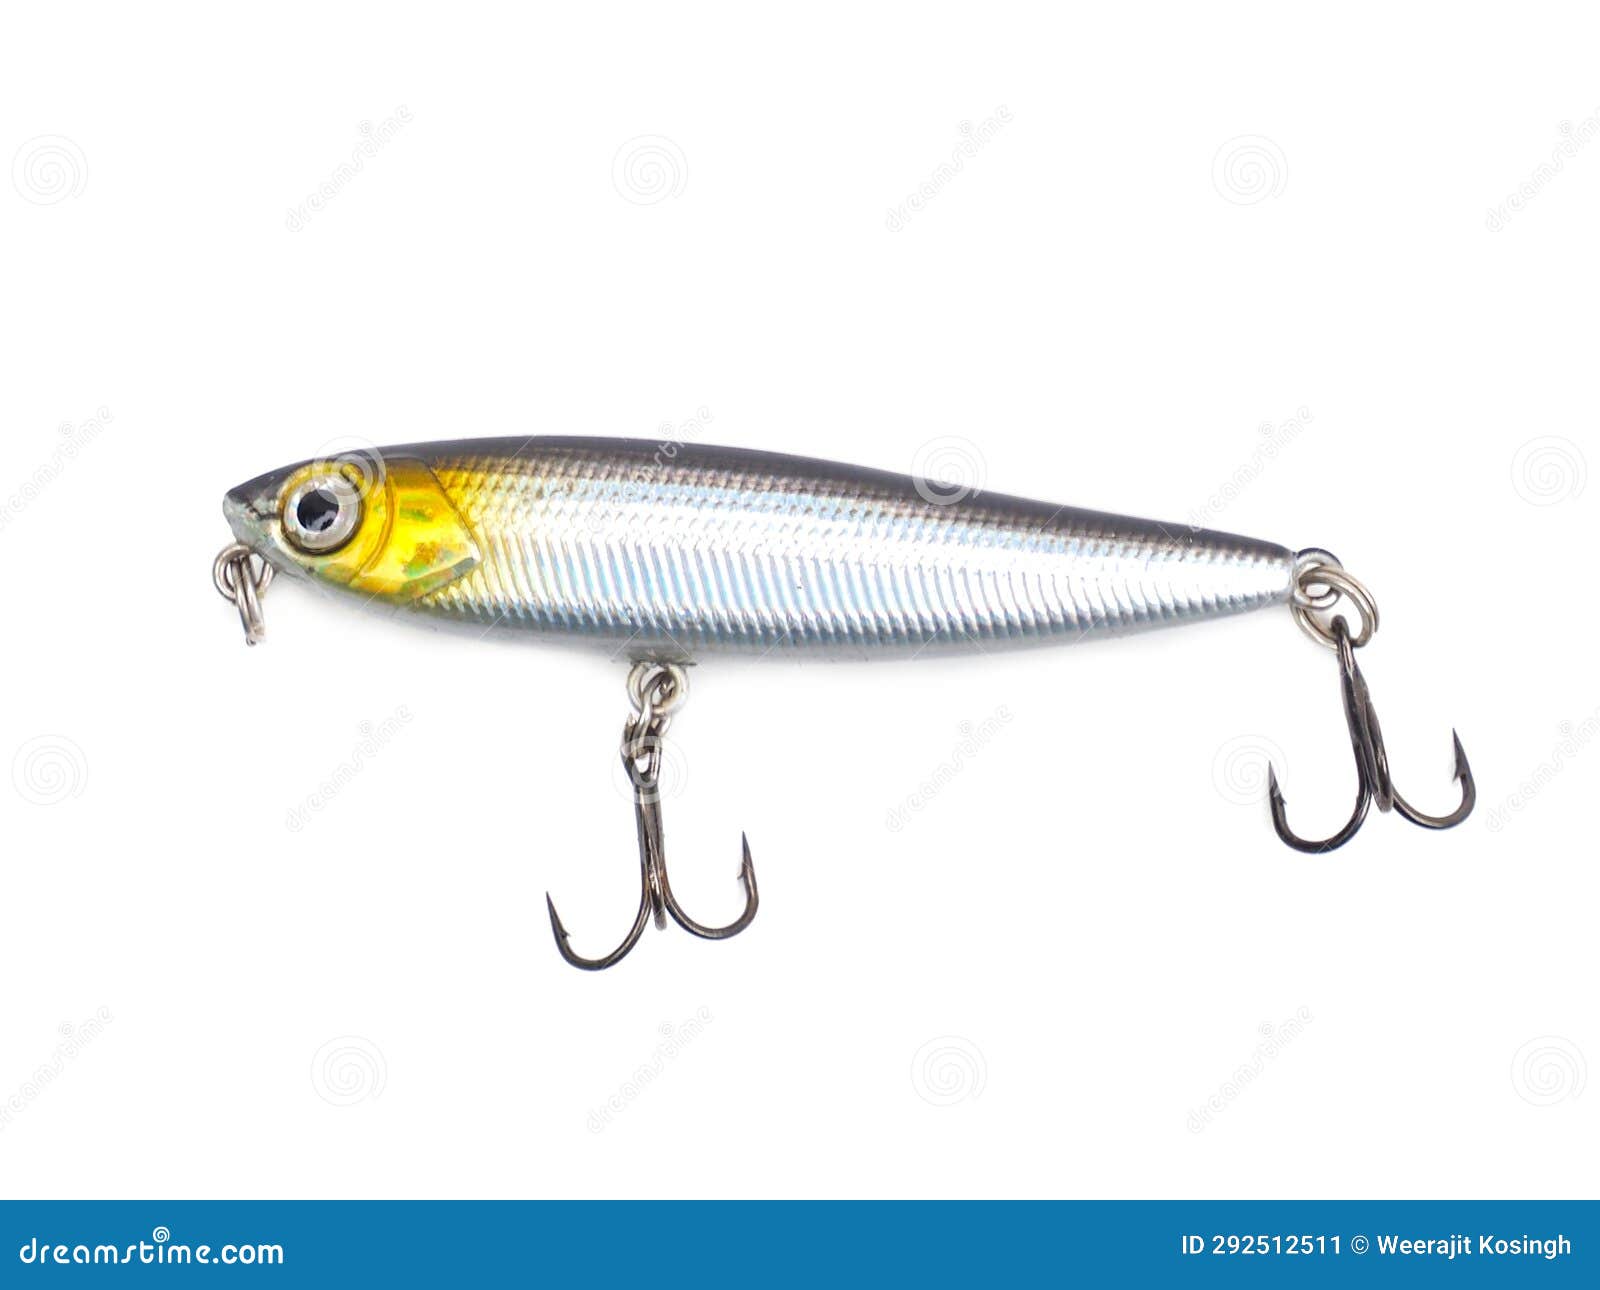 Plug Baits with 3 Way Hooks. Fishing Equipment Isolated on White Background  Stock Image - Image of equipment, lure: 292512511